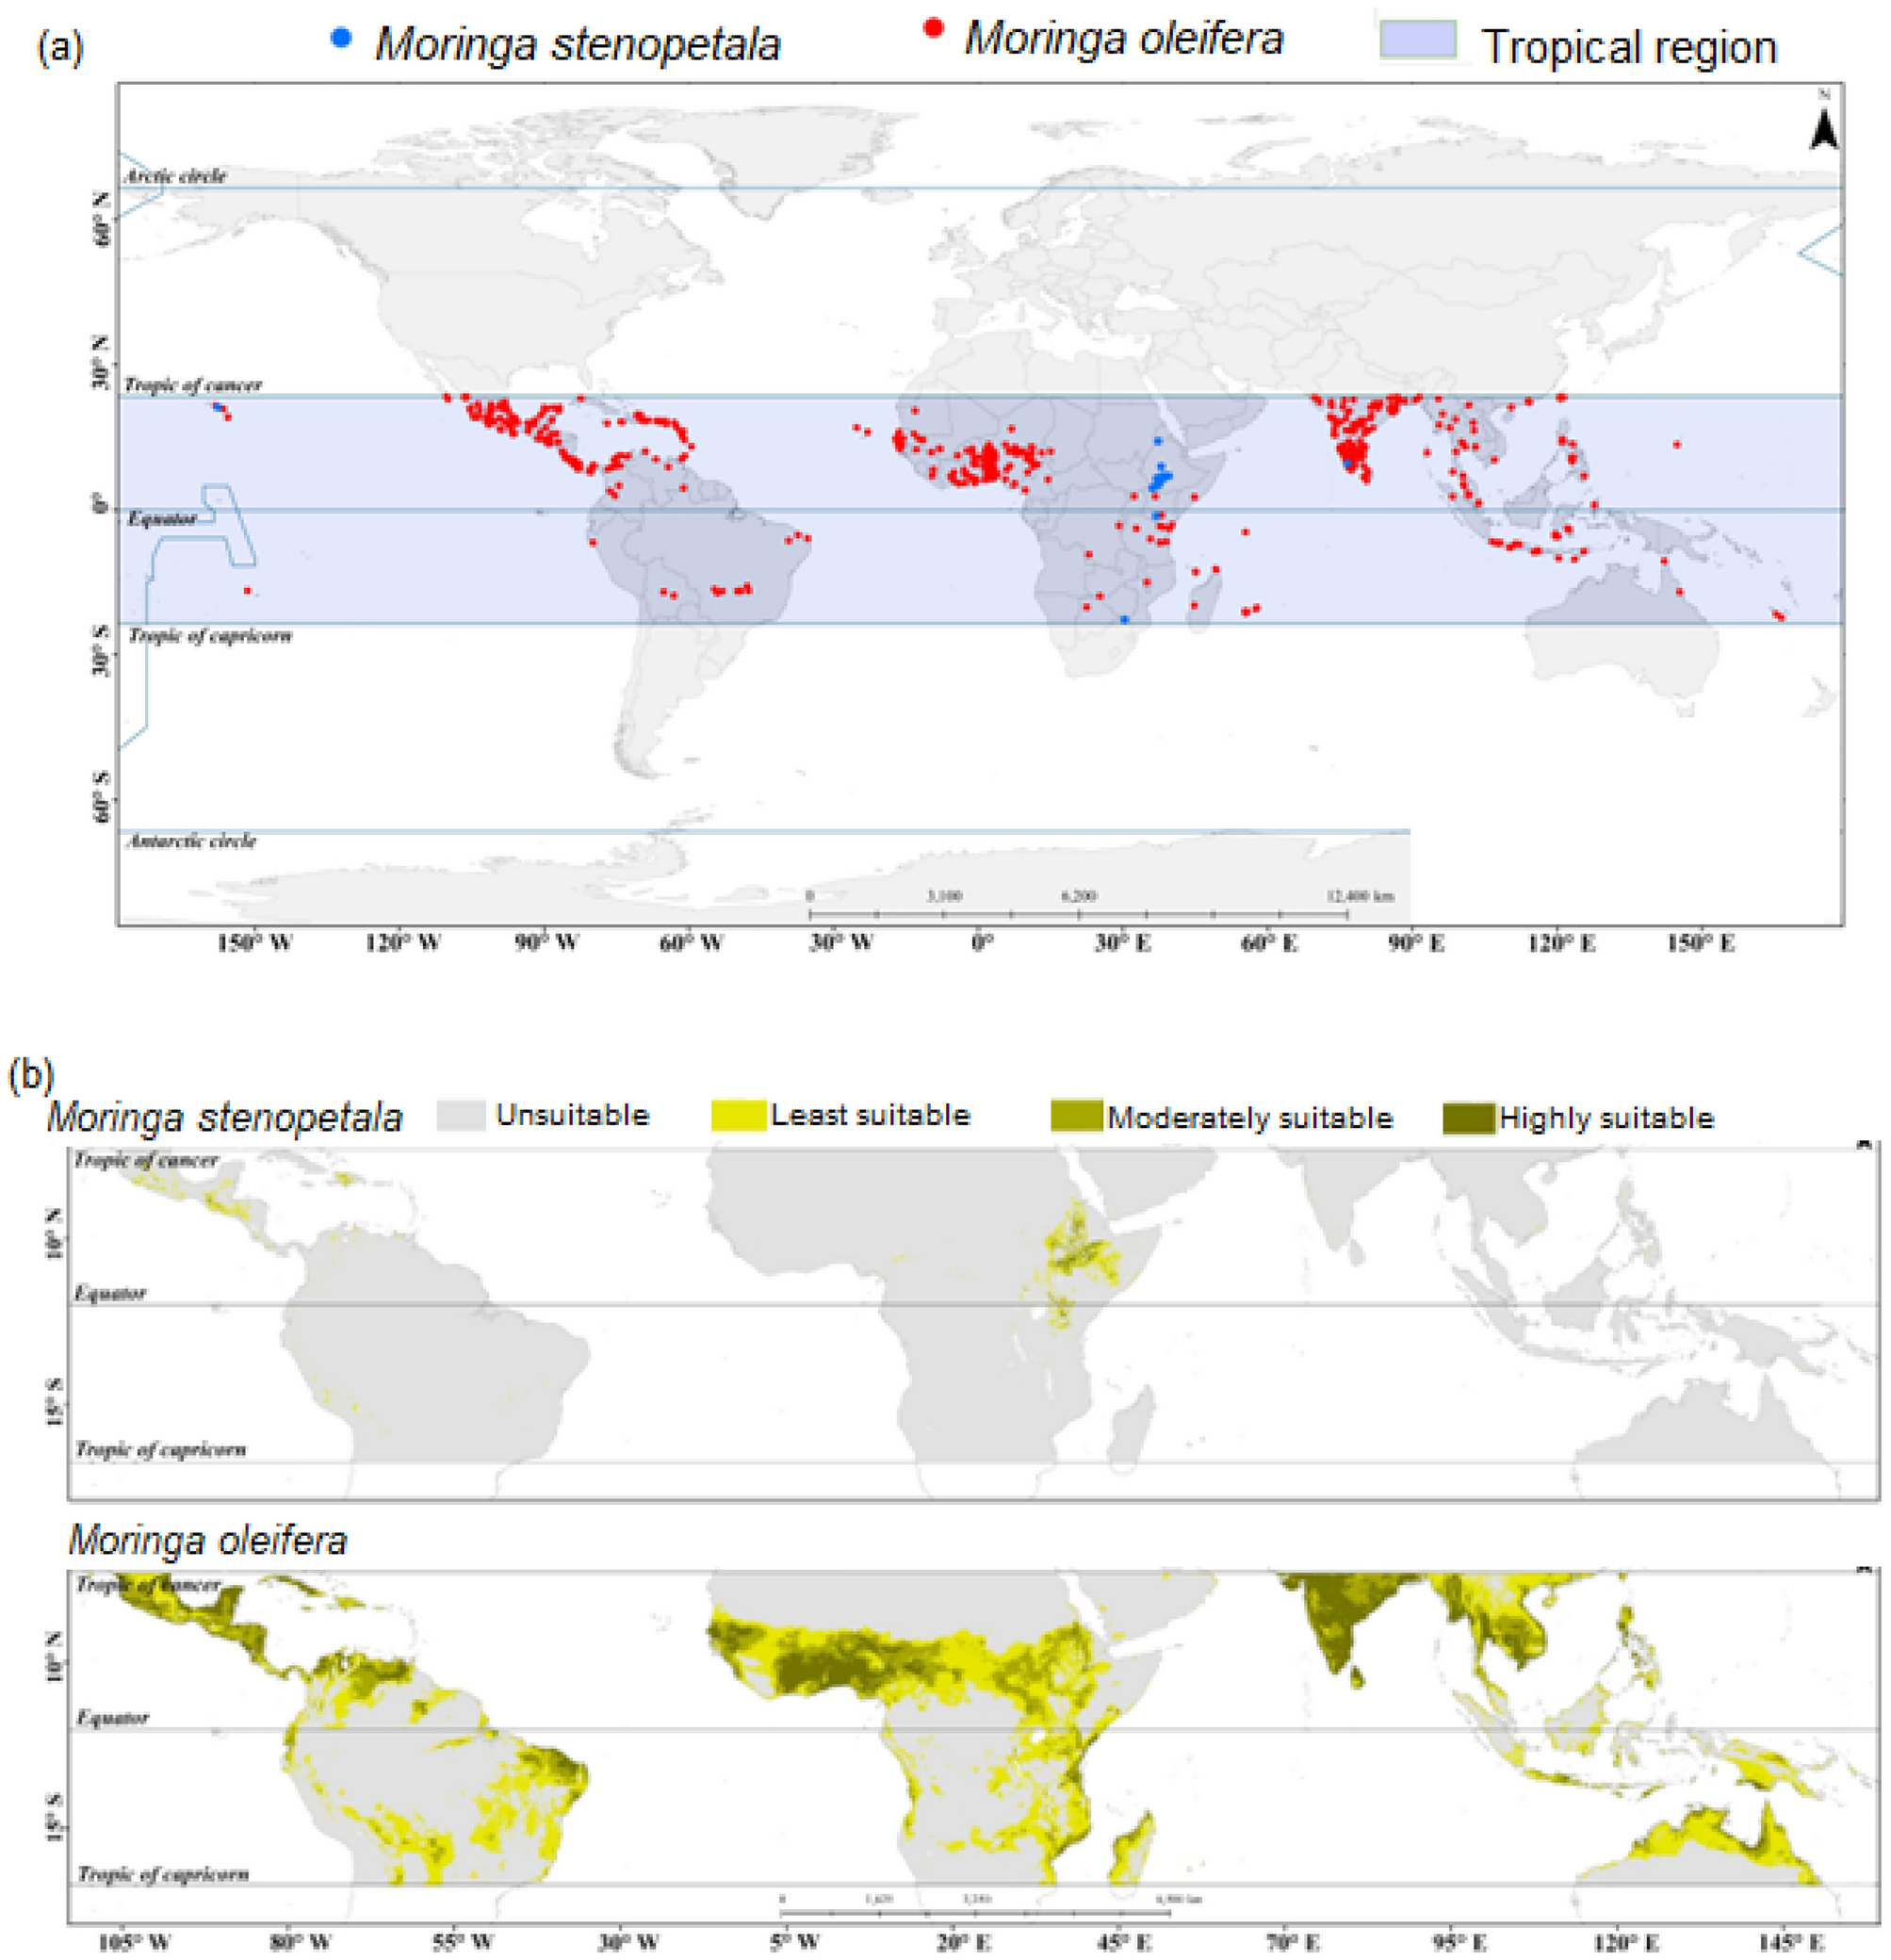 Modelling habitat suitability for Moringa oleifera and Moringa stenopetala  under current and future climate change scenarios